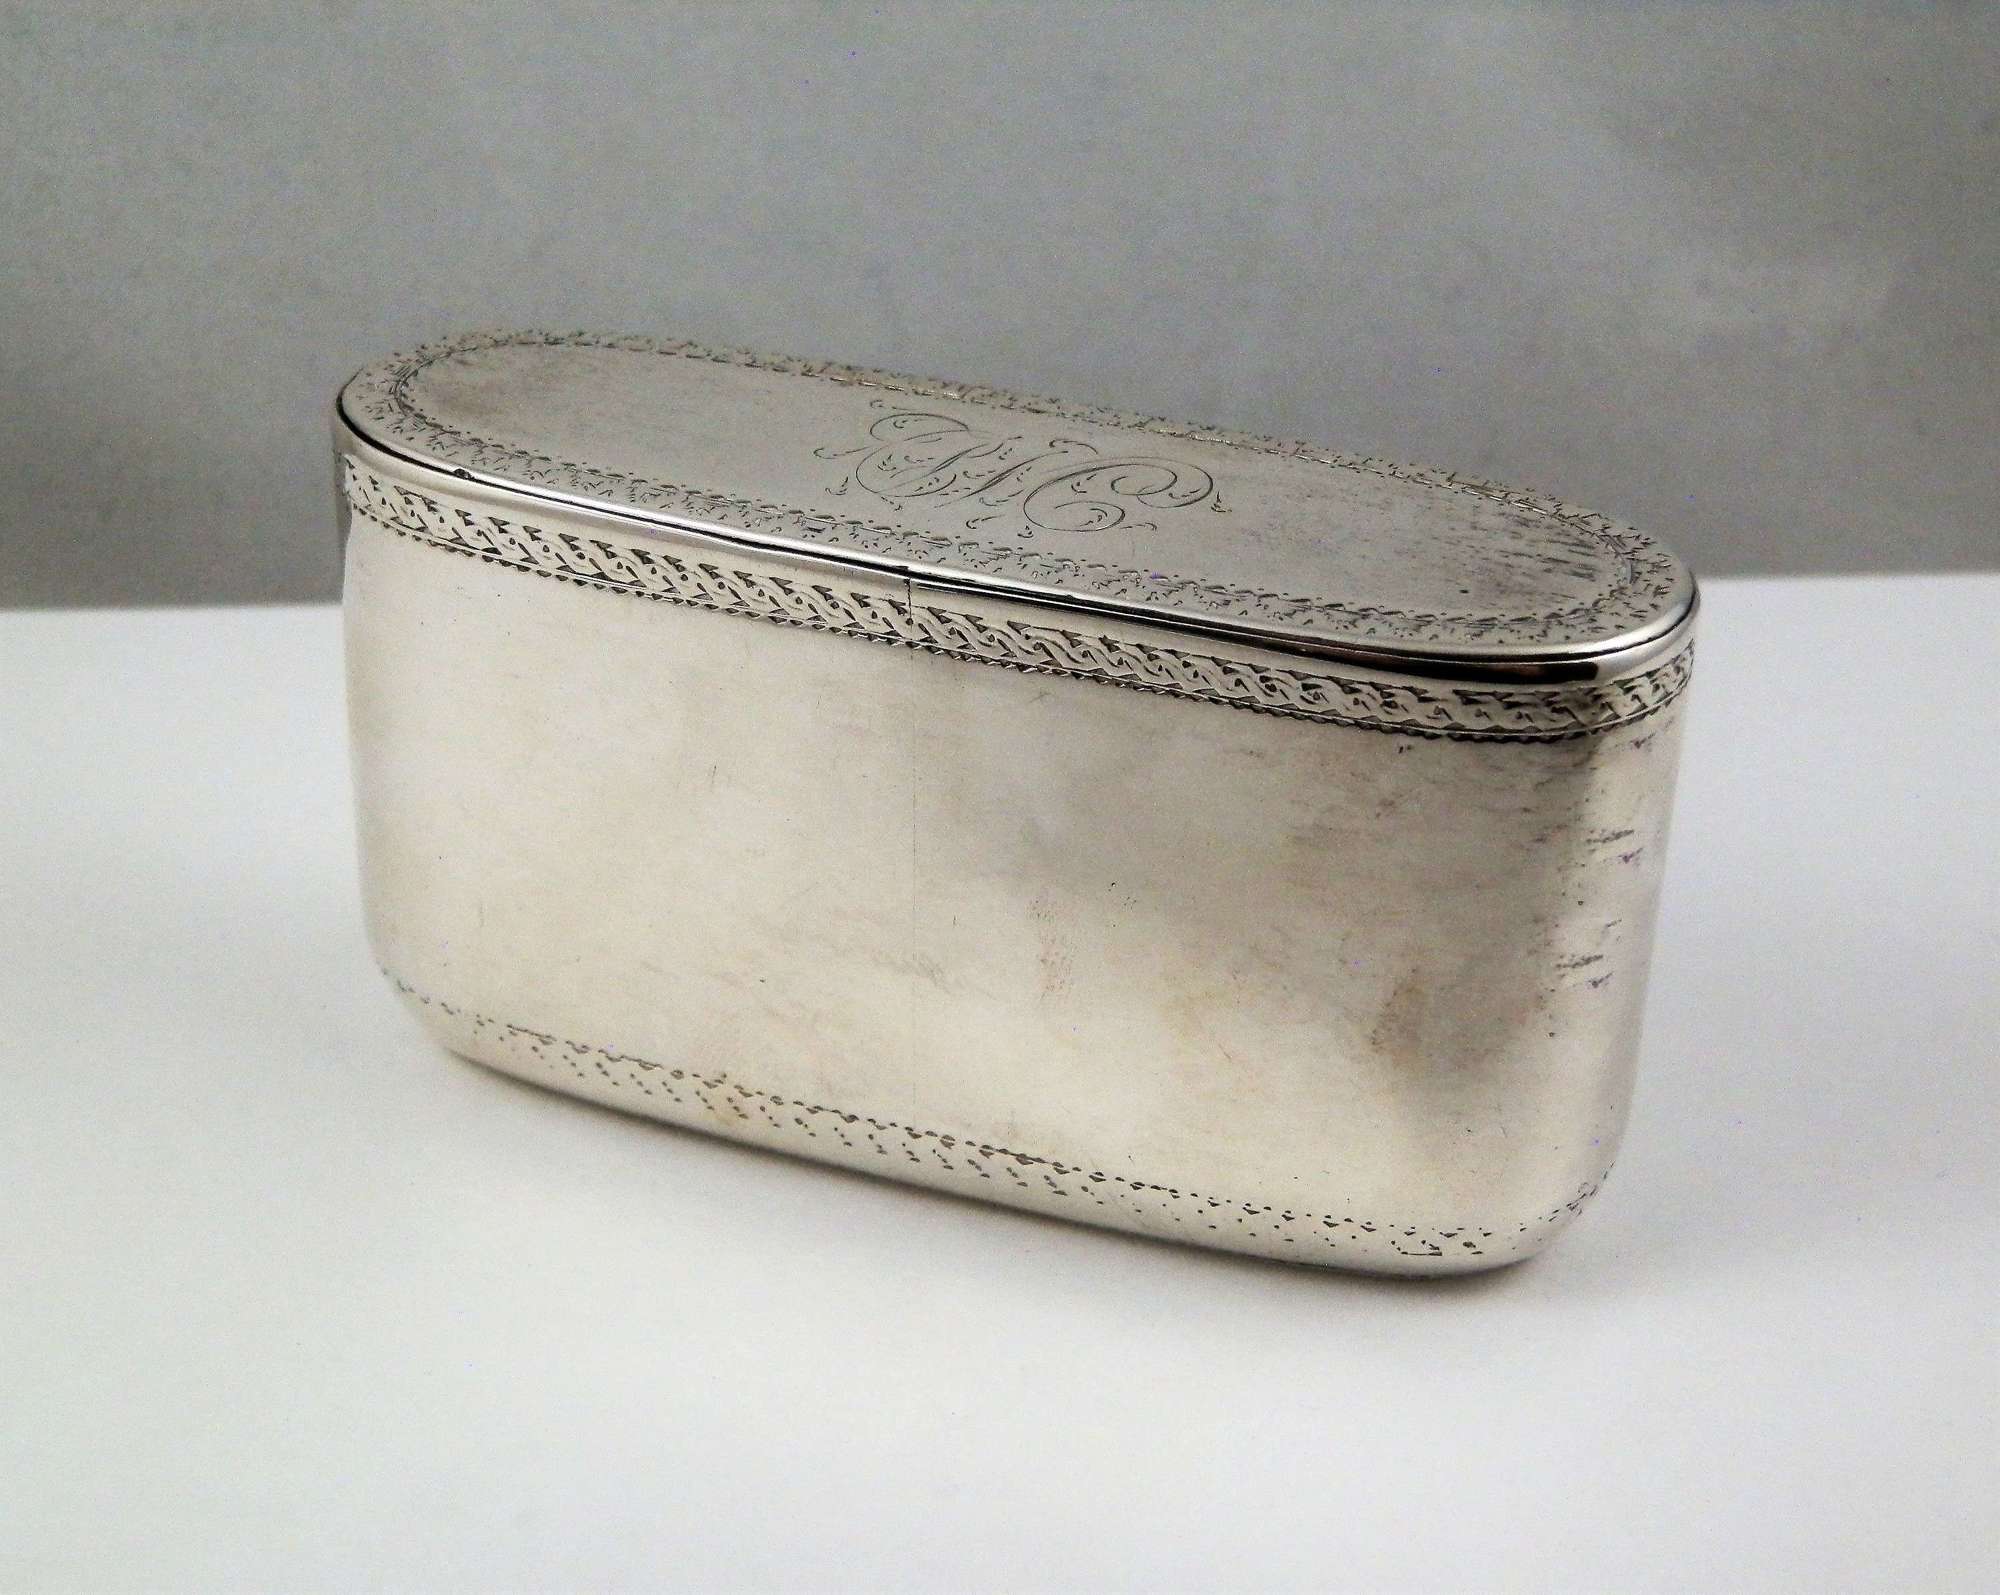 George III silver snuff box, by George Cowles, London 1781